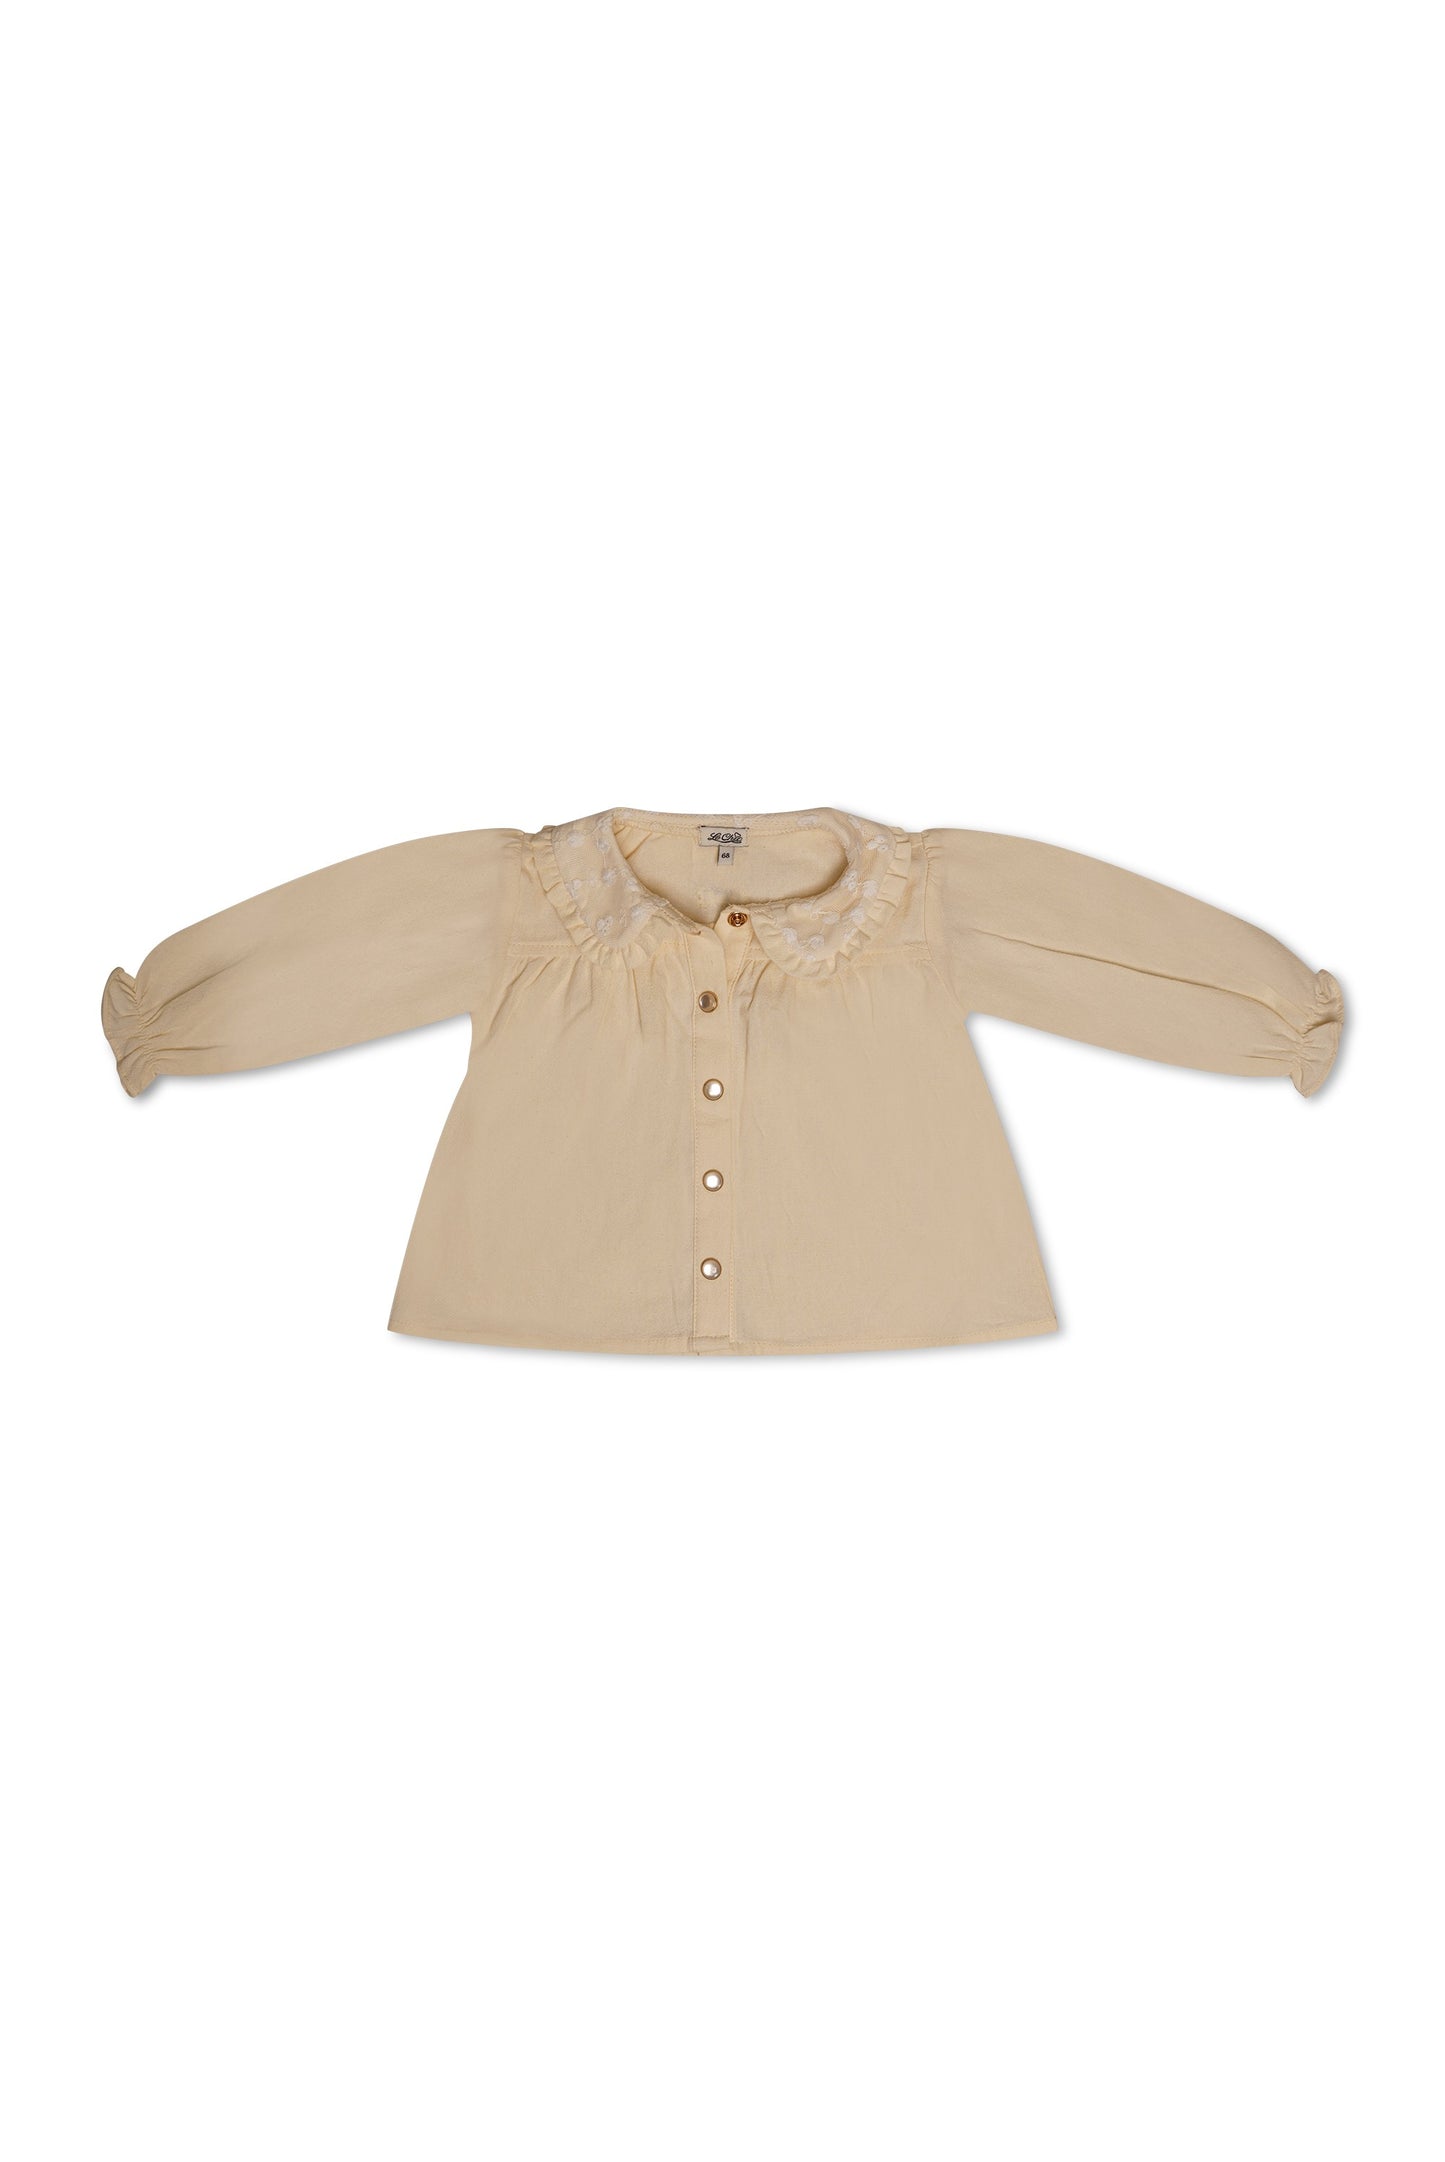 || Le Chic || Katoenen baby blouse